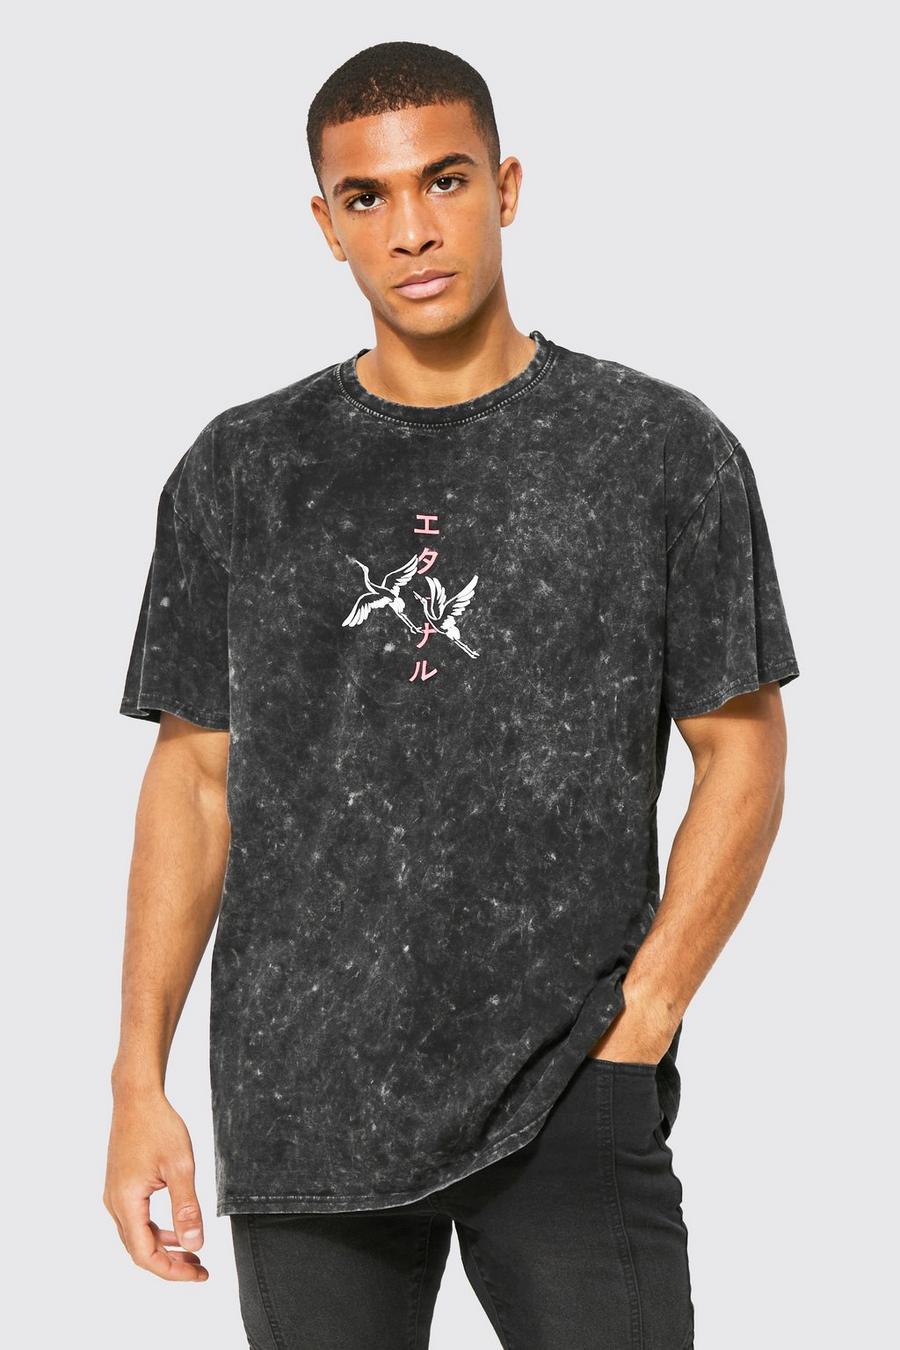 Charcoal grey Oversized Acid Wash Crane Graphic T-shirt